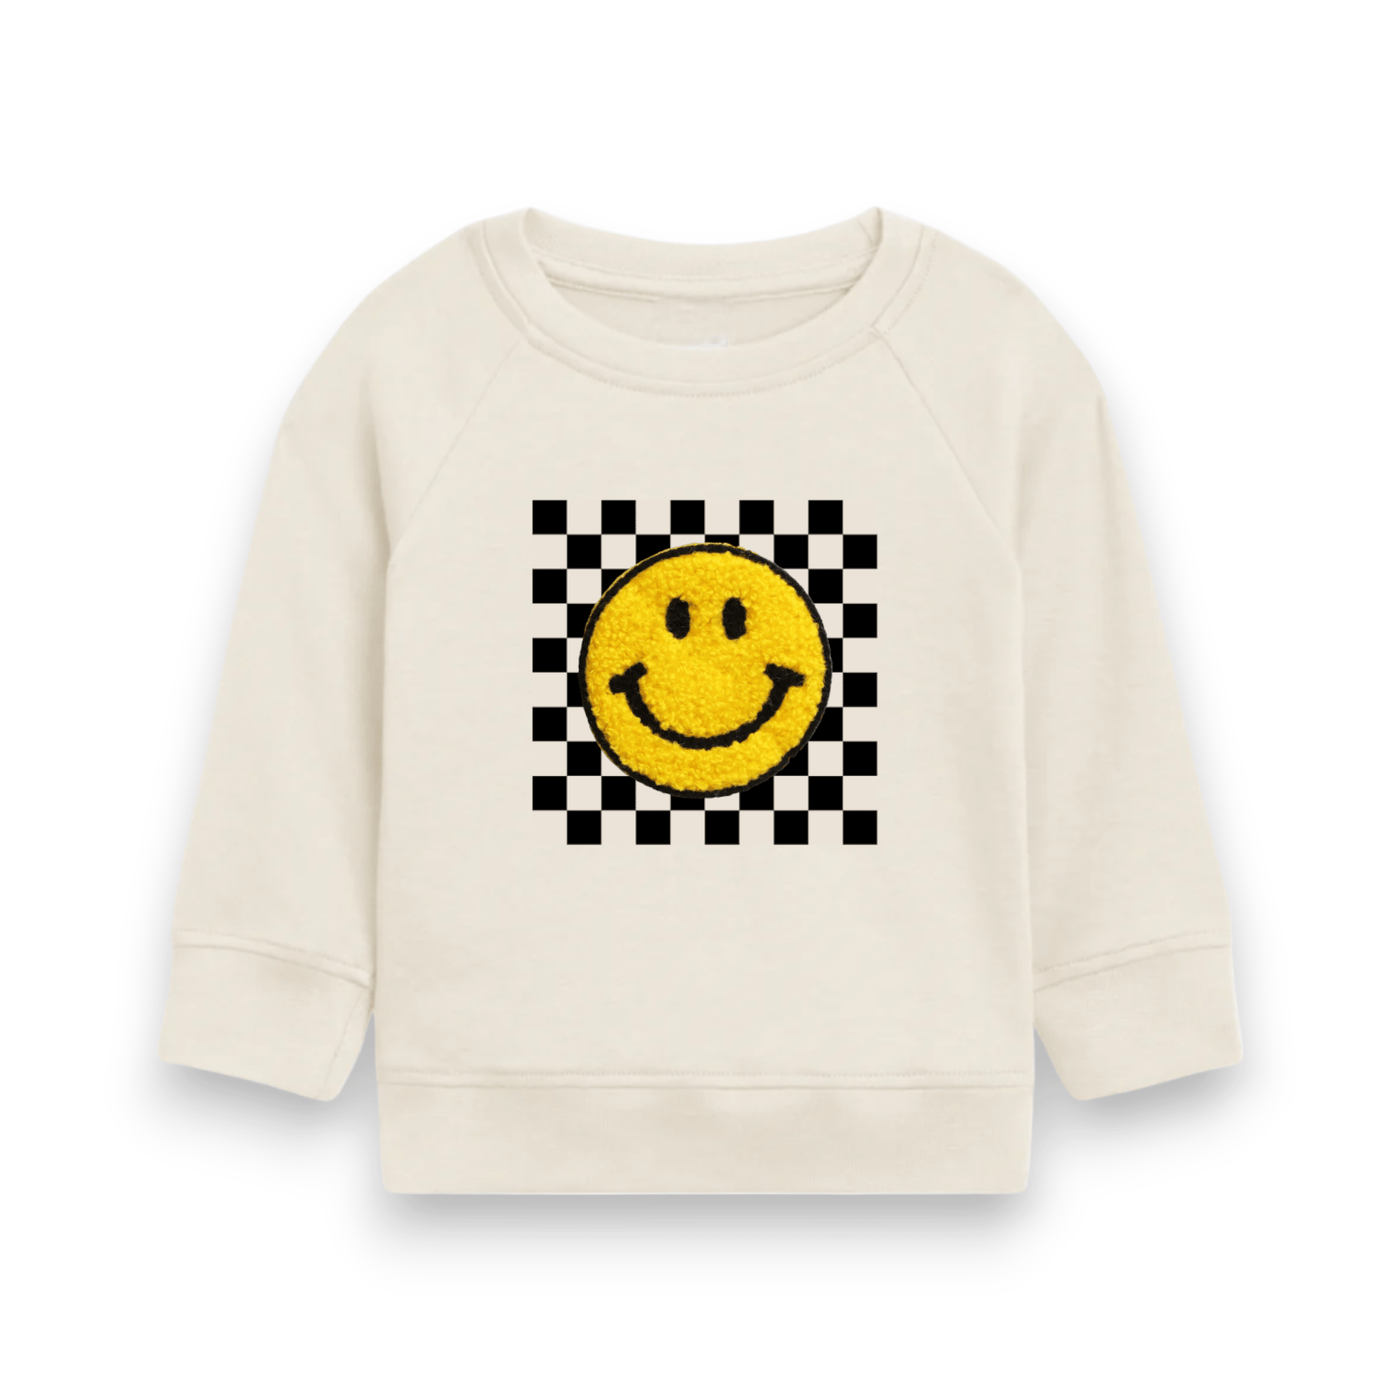 Best Day Ever Kids Baby & Toddler Tops The Big Happy Oversized Sweatshirt buy online boutique kids clothing